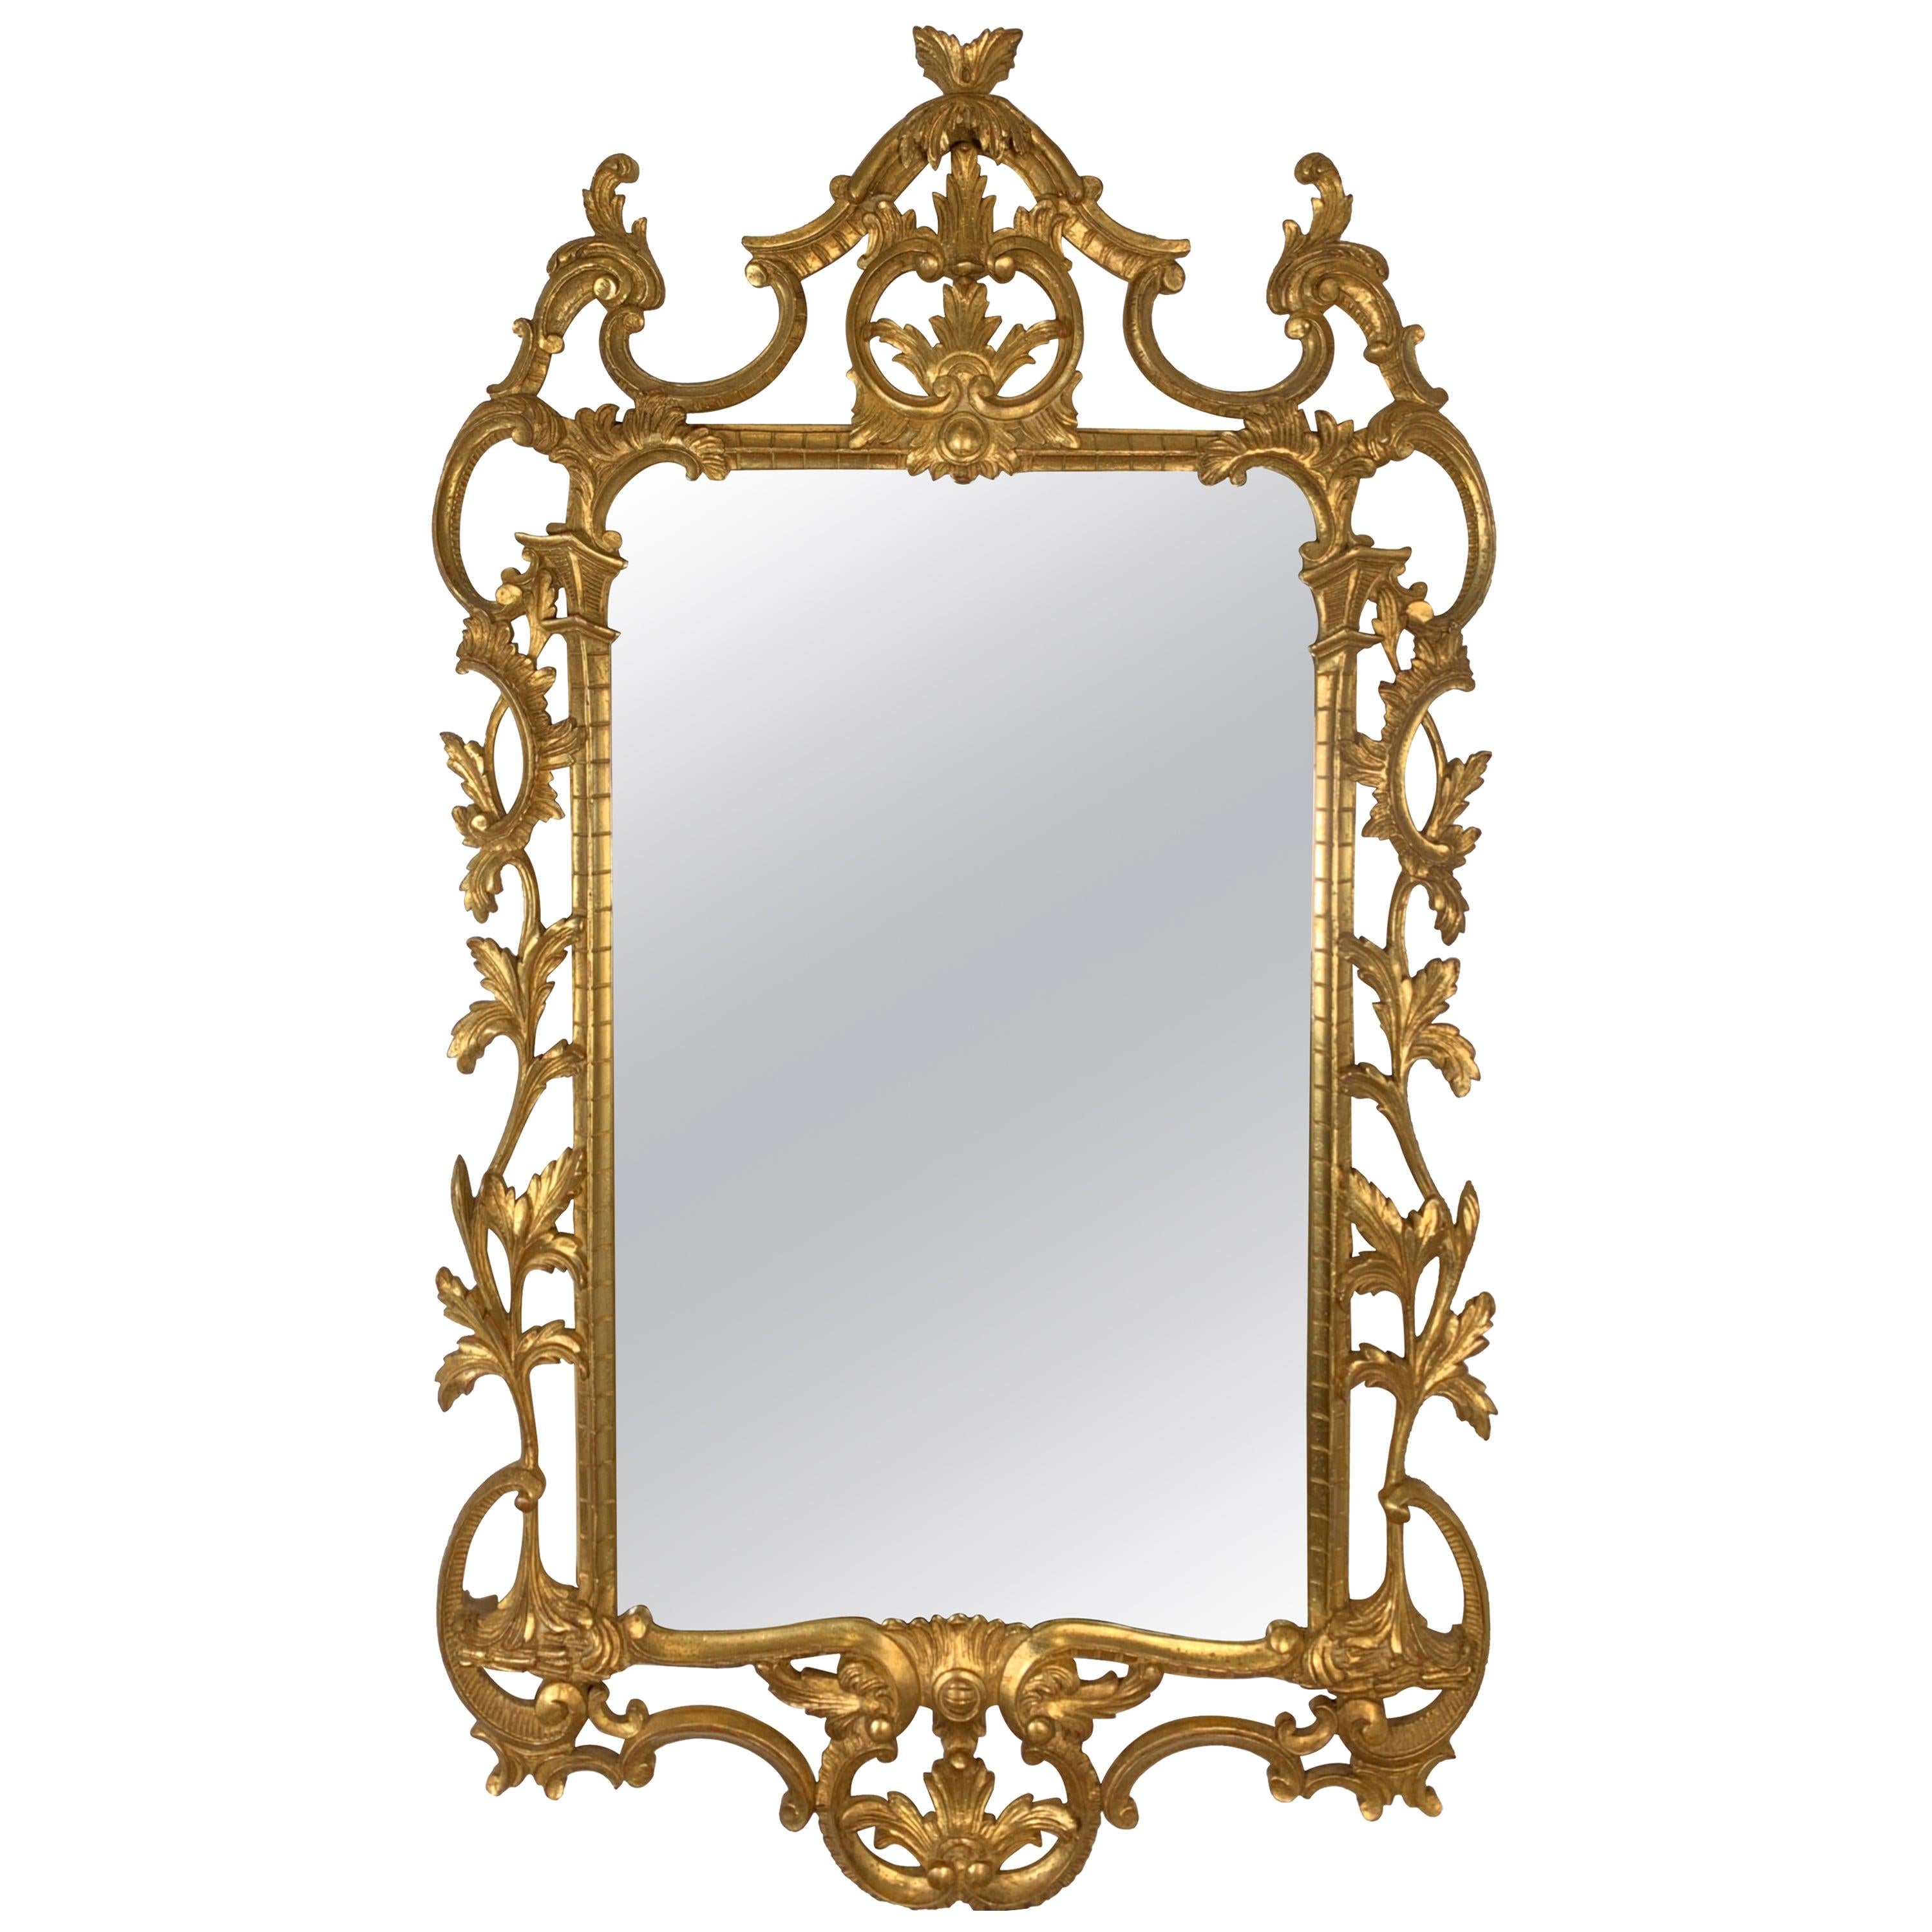 1950s-1960s Italian Gold Giltwood Rococo Style Mirror